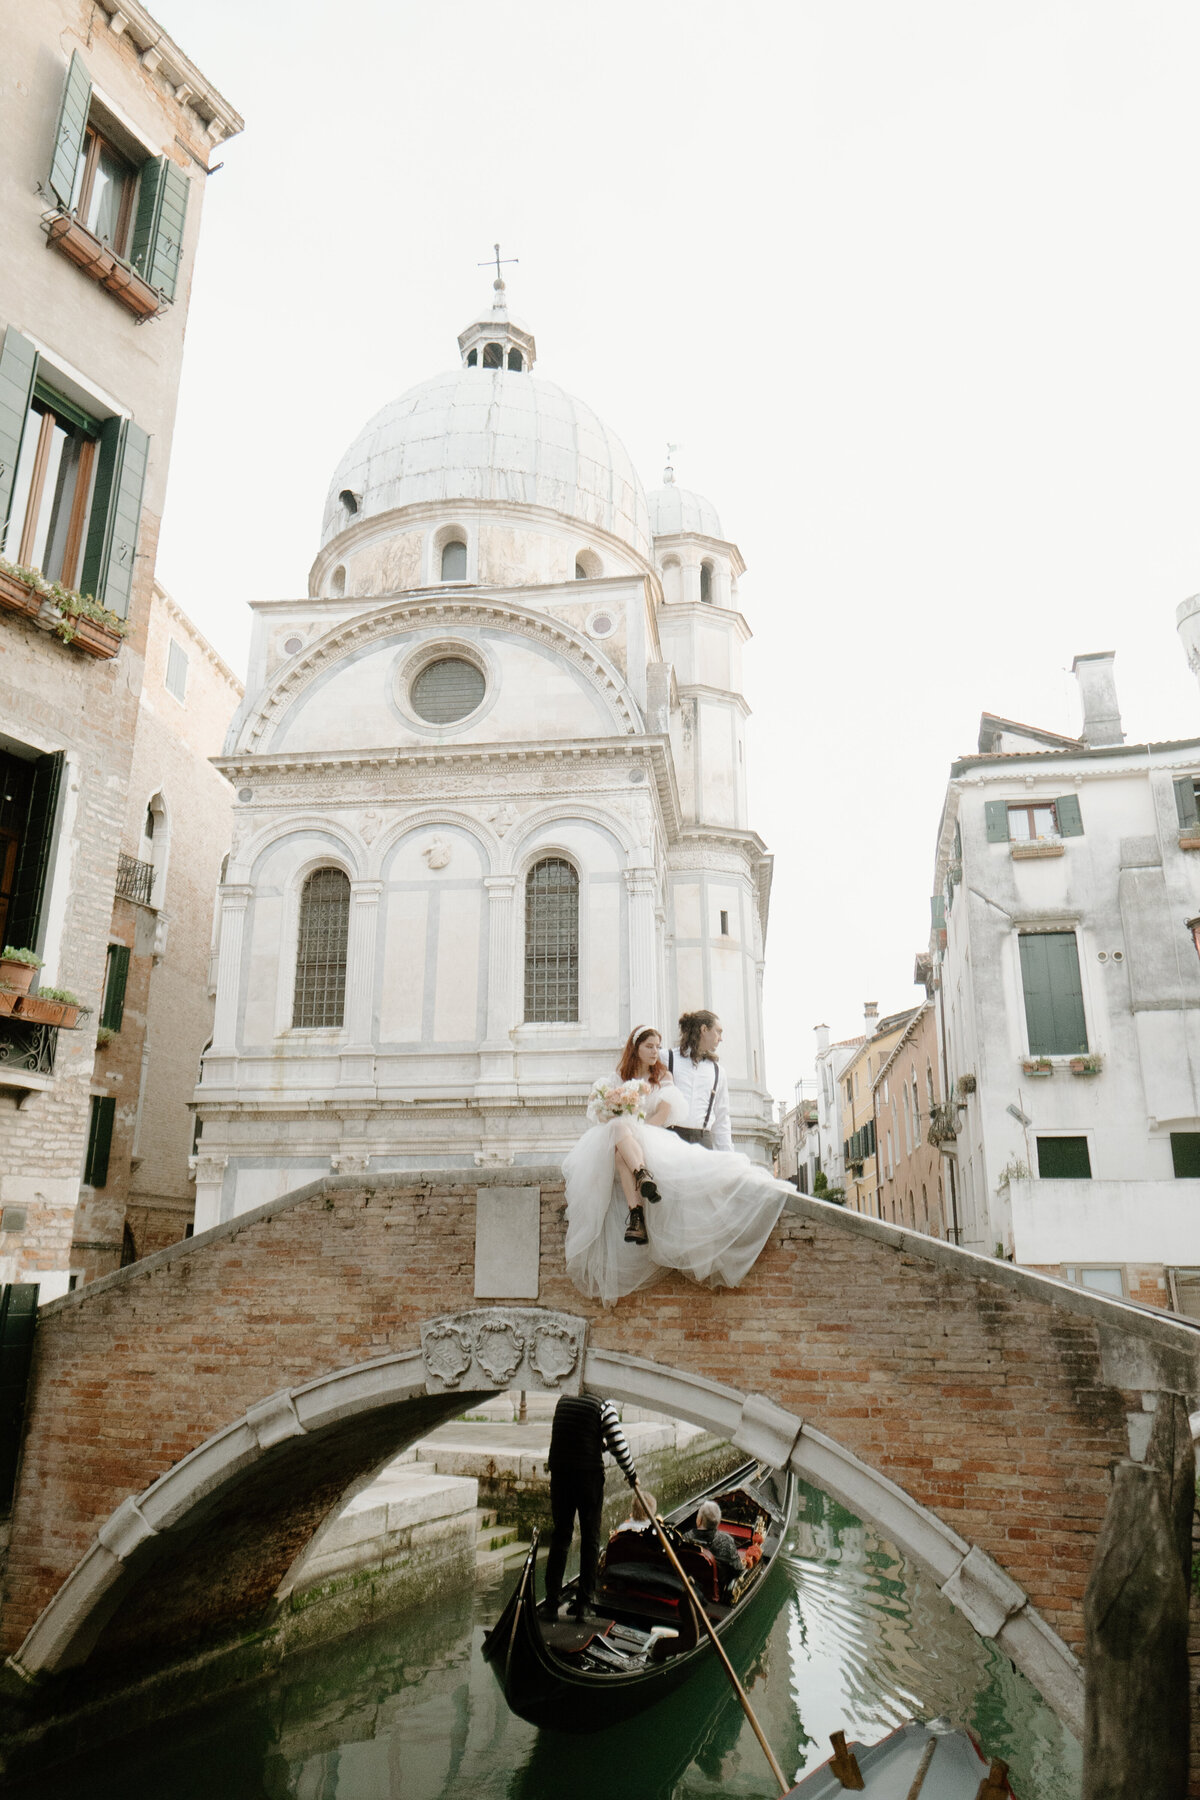 -Documentary-Style-Editorial-Vogue-gondola-Italy-Destination-Wedding-Leah-Gunn-PhotographyDocumentary-Style-Editorial-Vogue-gondola-Italy-Destination-Wedding-Leah-Gunn-Photography-17